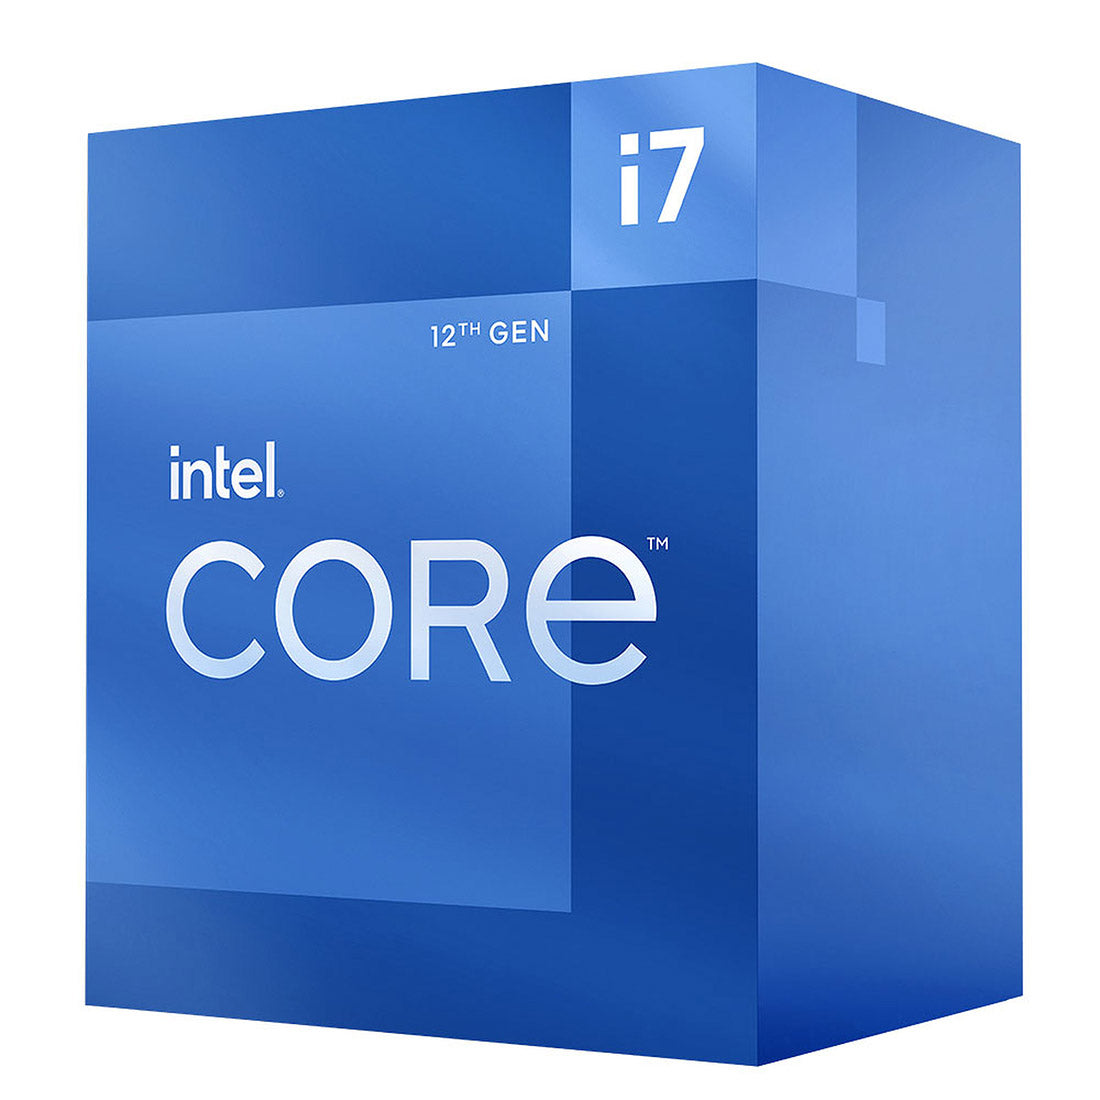 Intel Core 12th Gen i7-12700 LGA1700 डेस्कटॉप प्रोसेसर 12 कोर 4.9GHz तक 25MB कैशे